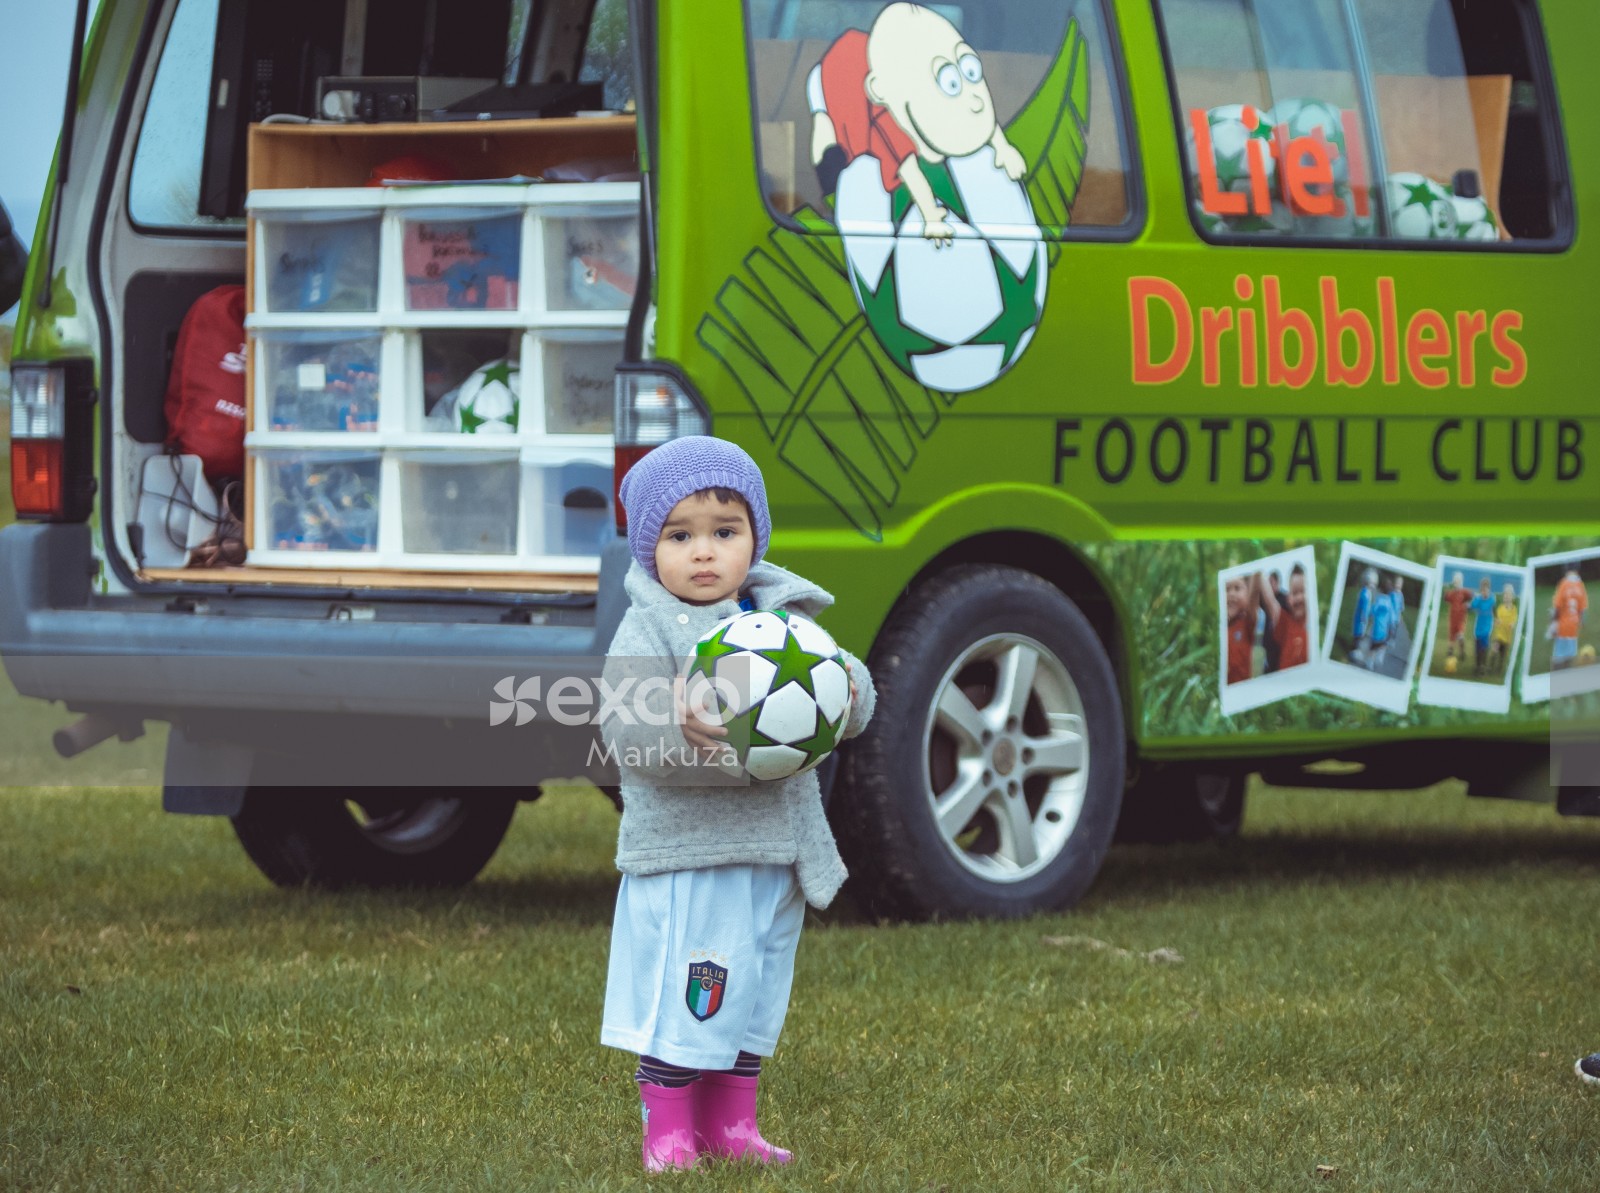 Little girl carrying a football next to Little Dribblers football club van